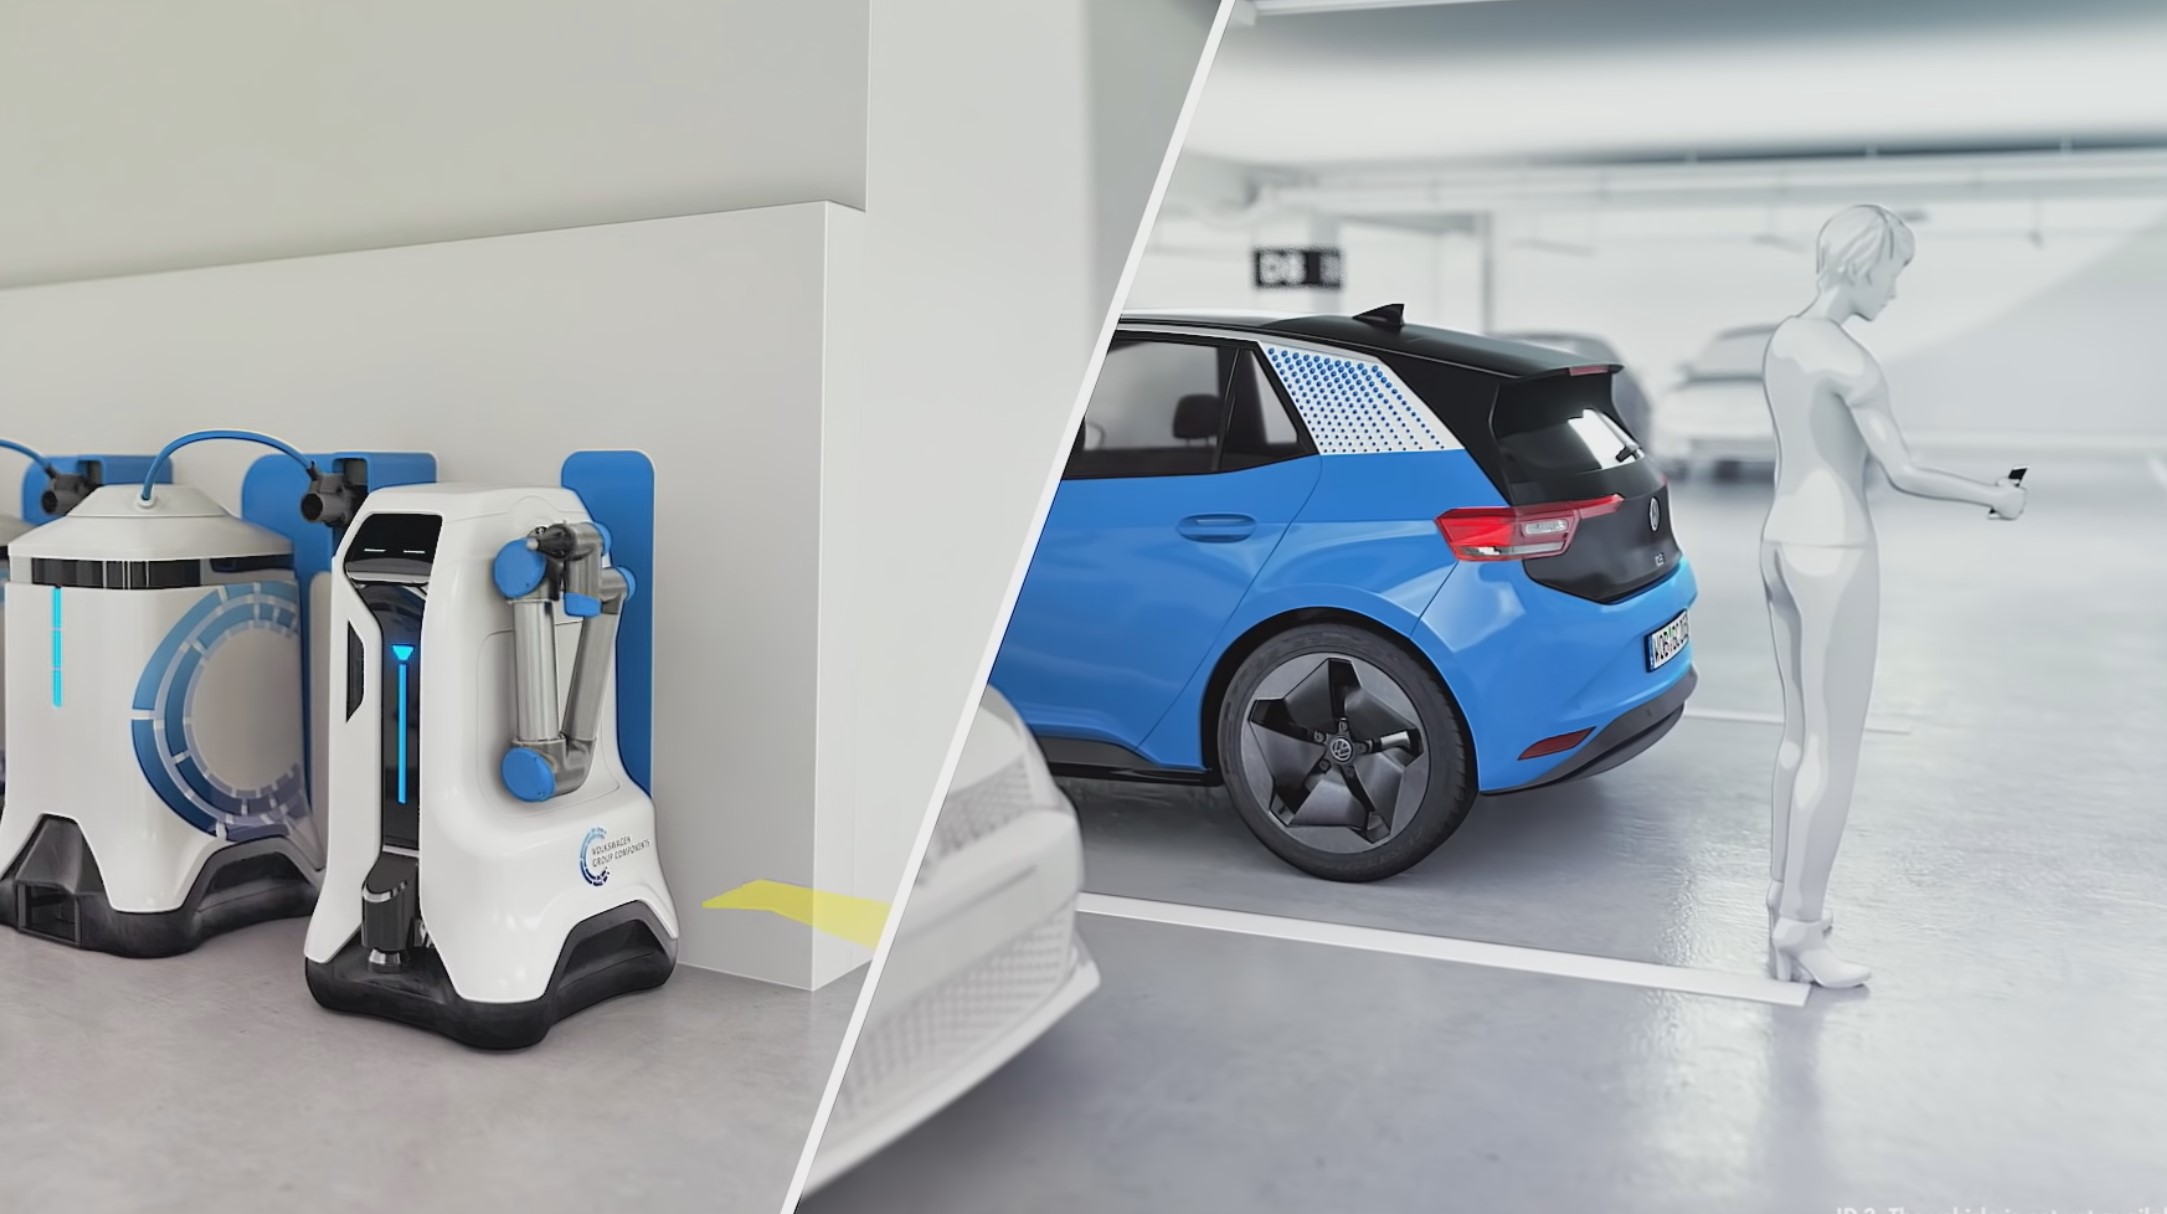 VW's mobile charging robot recharges electric cars autonomously